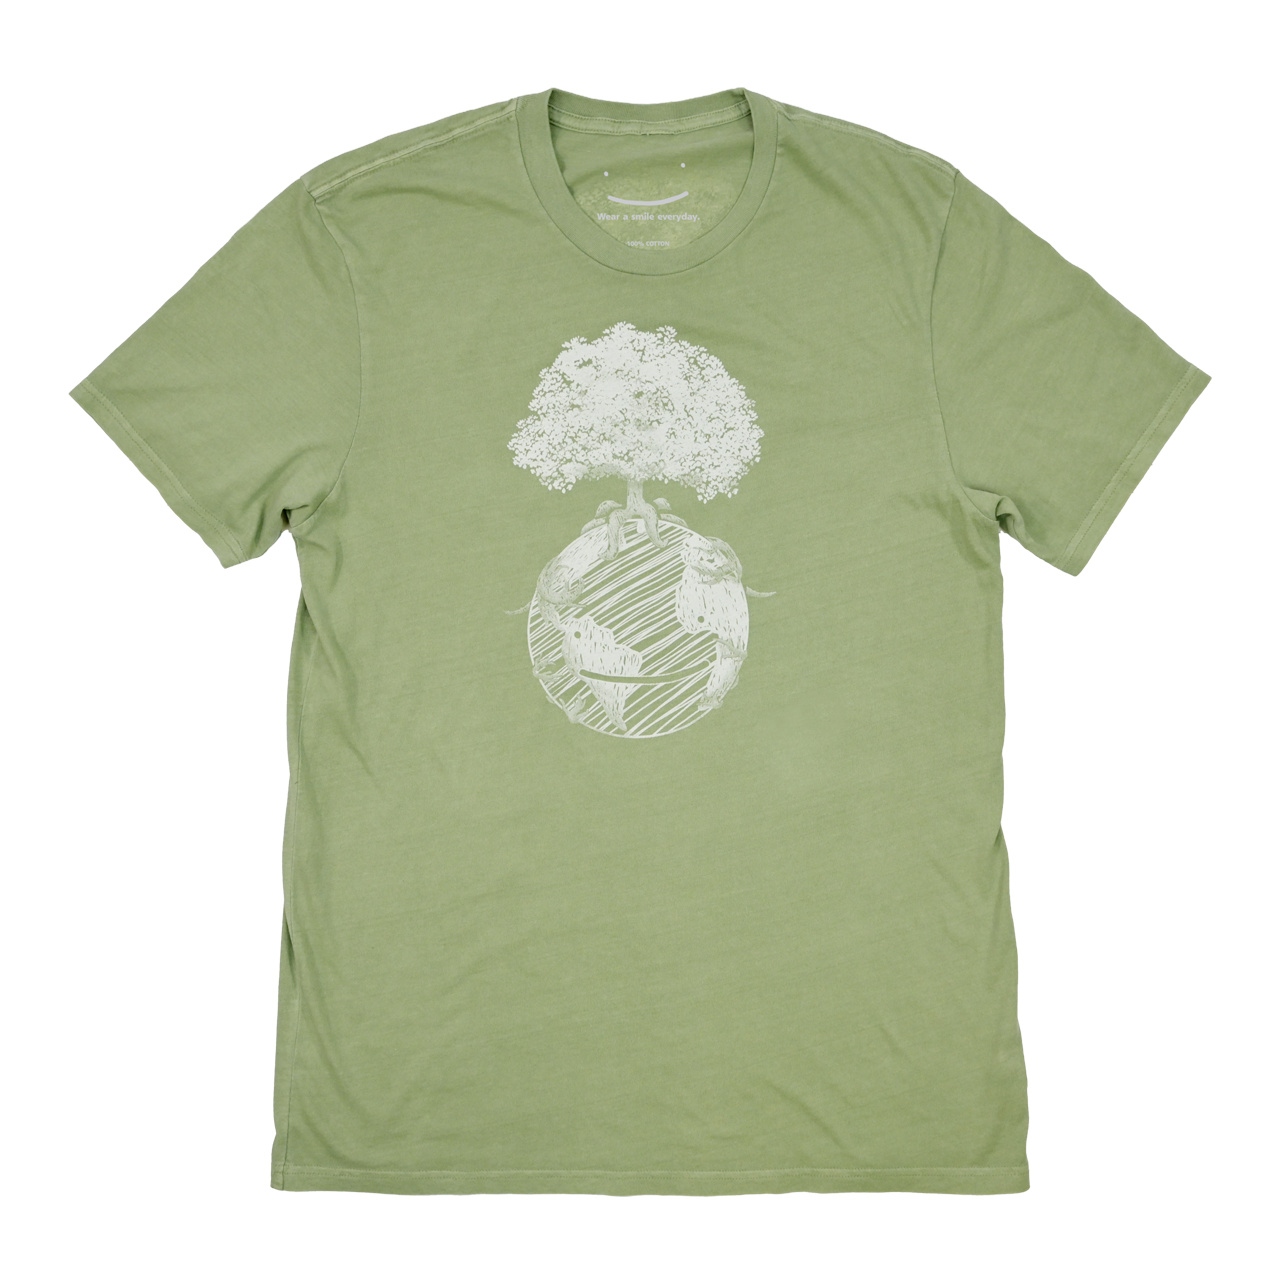 Dream Earth Day Organic Cotton T-shirt